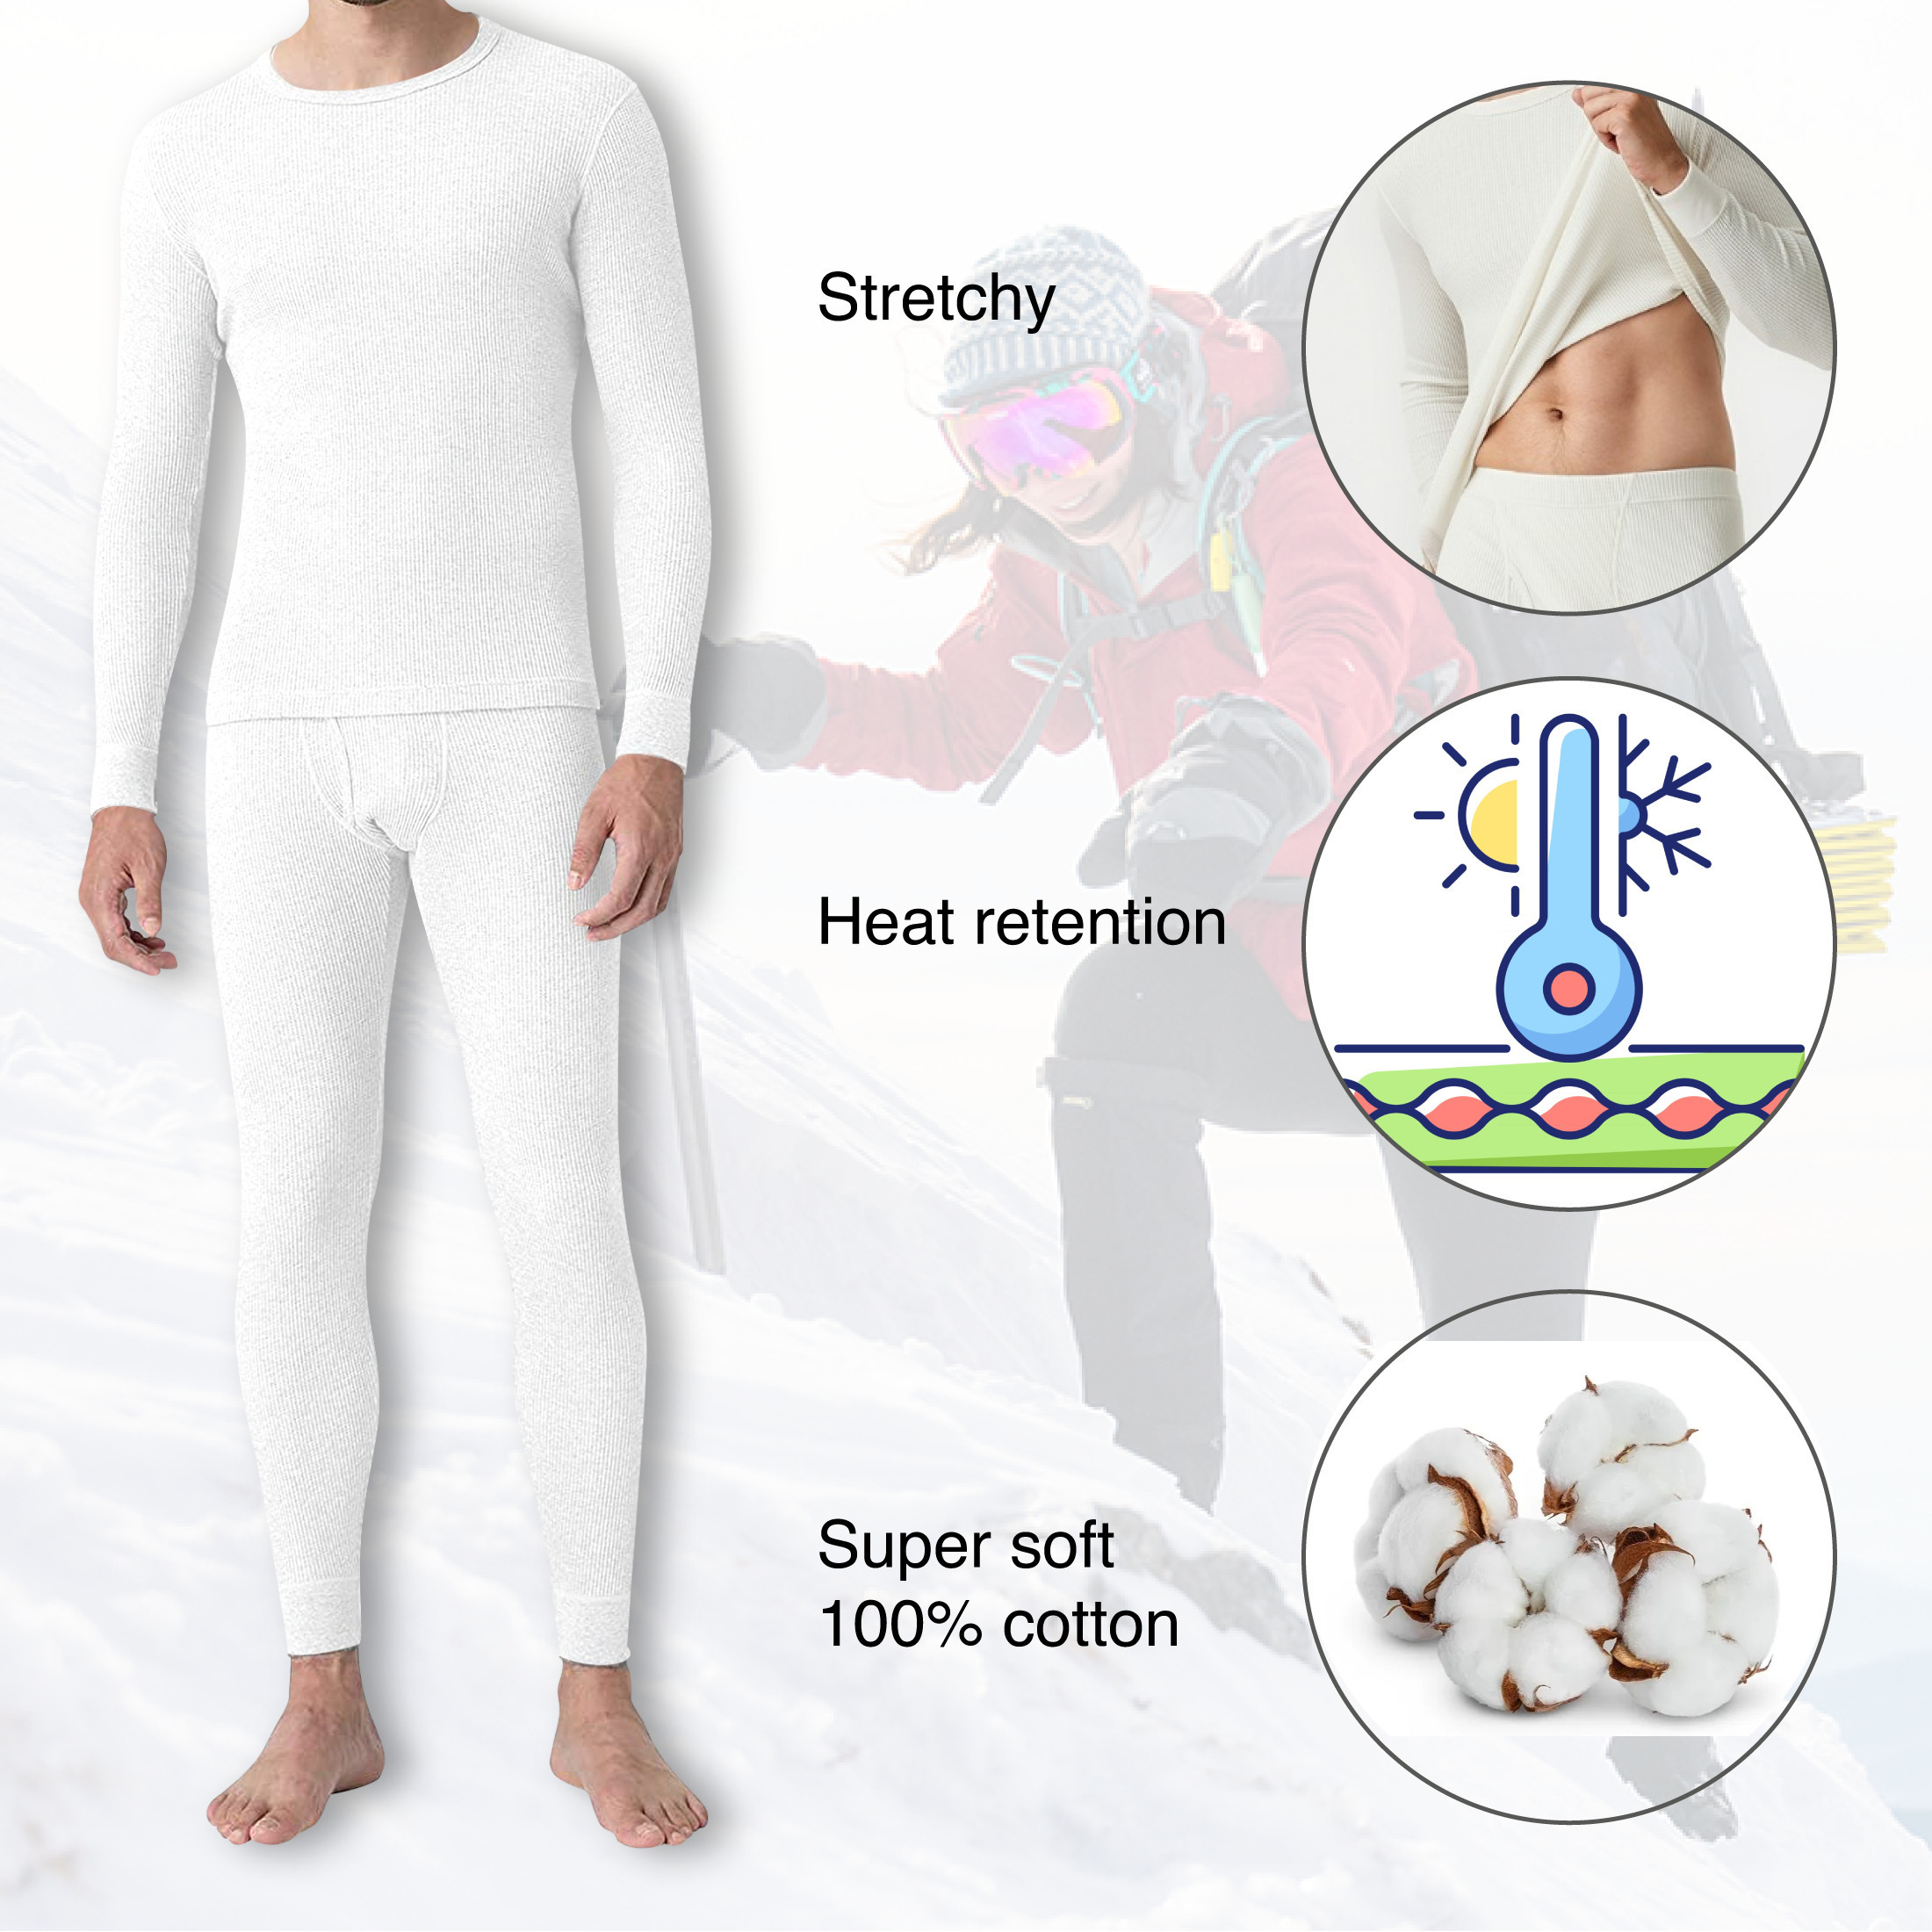 2-Sets: Men's Super Soft Cotton Waffle Knit Winter Thermal Underwear Set - Black & Navy, Medium